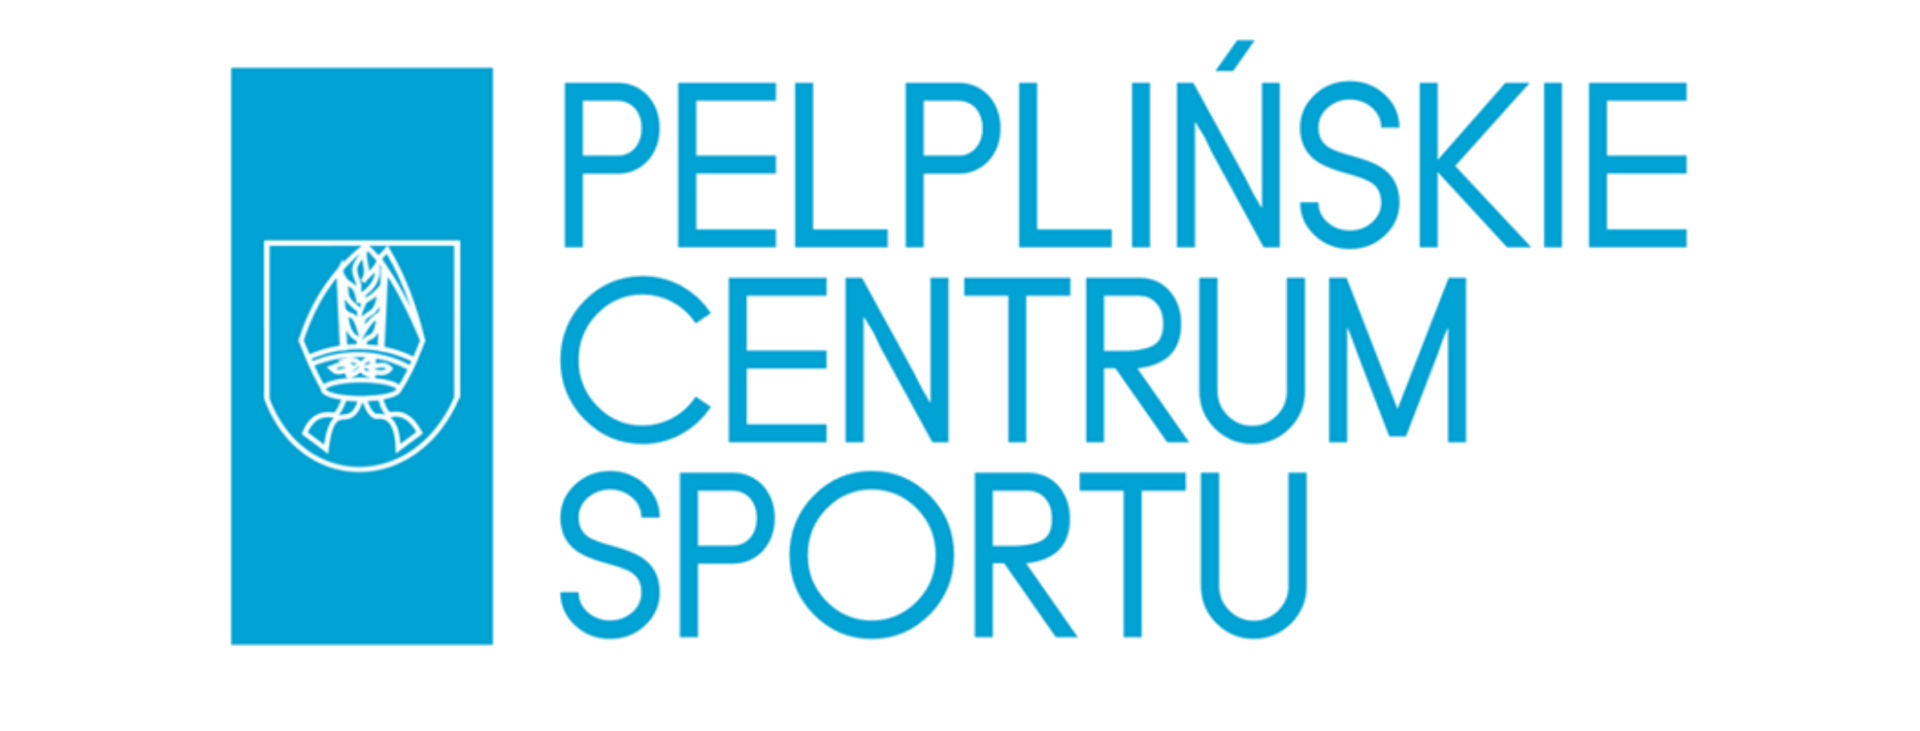 Logo Pelinskiego Centrum Sportu.